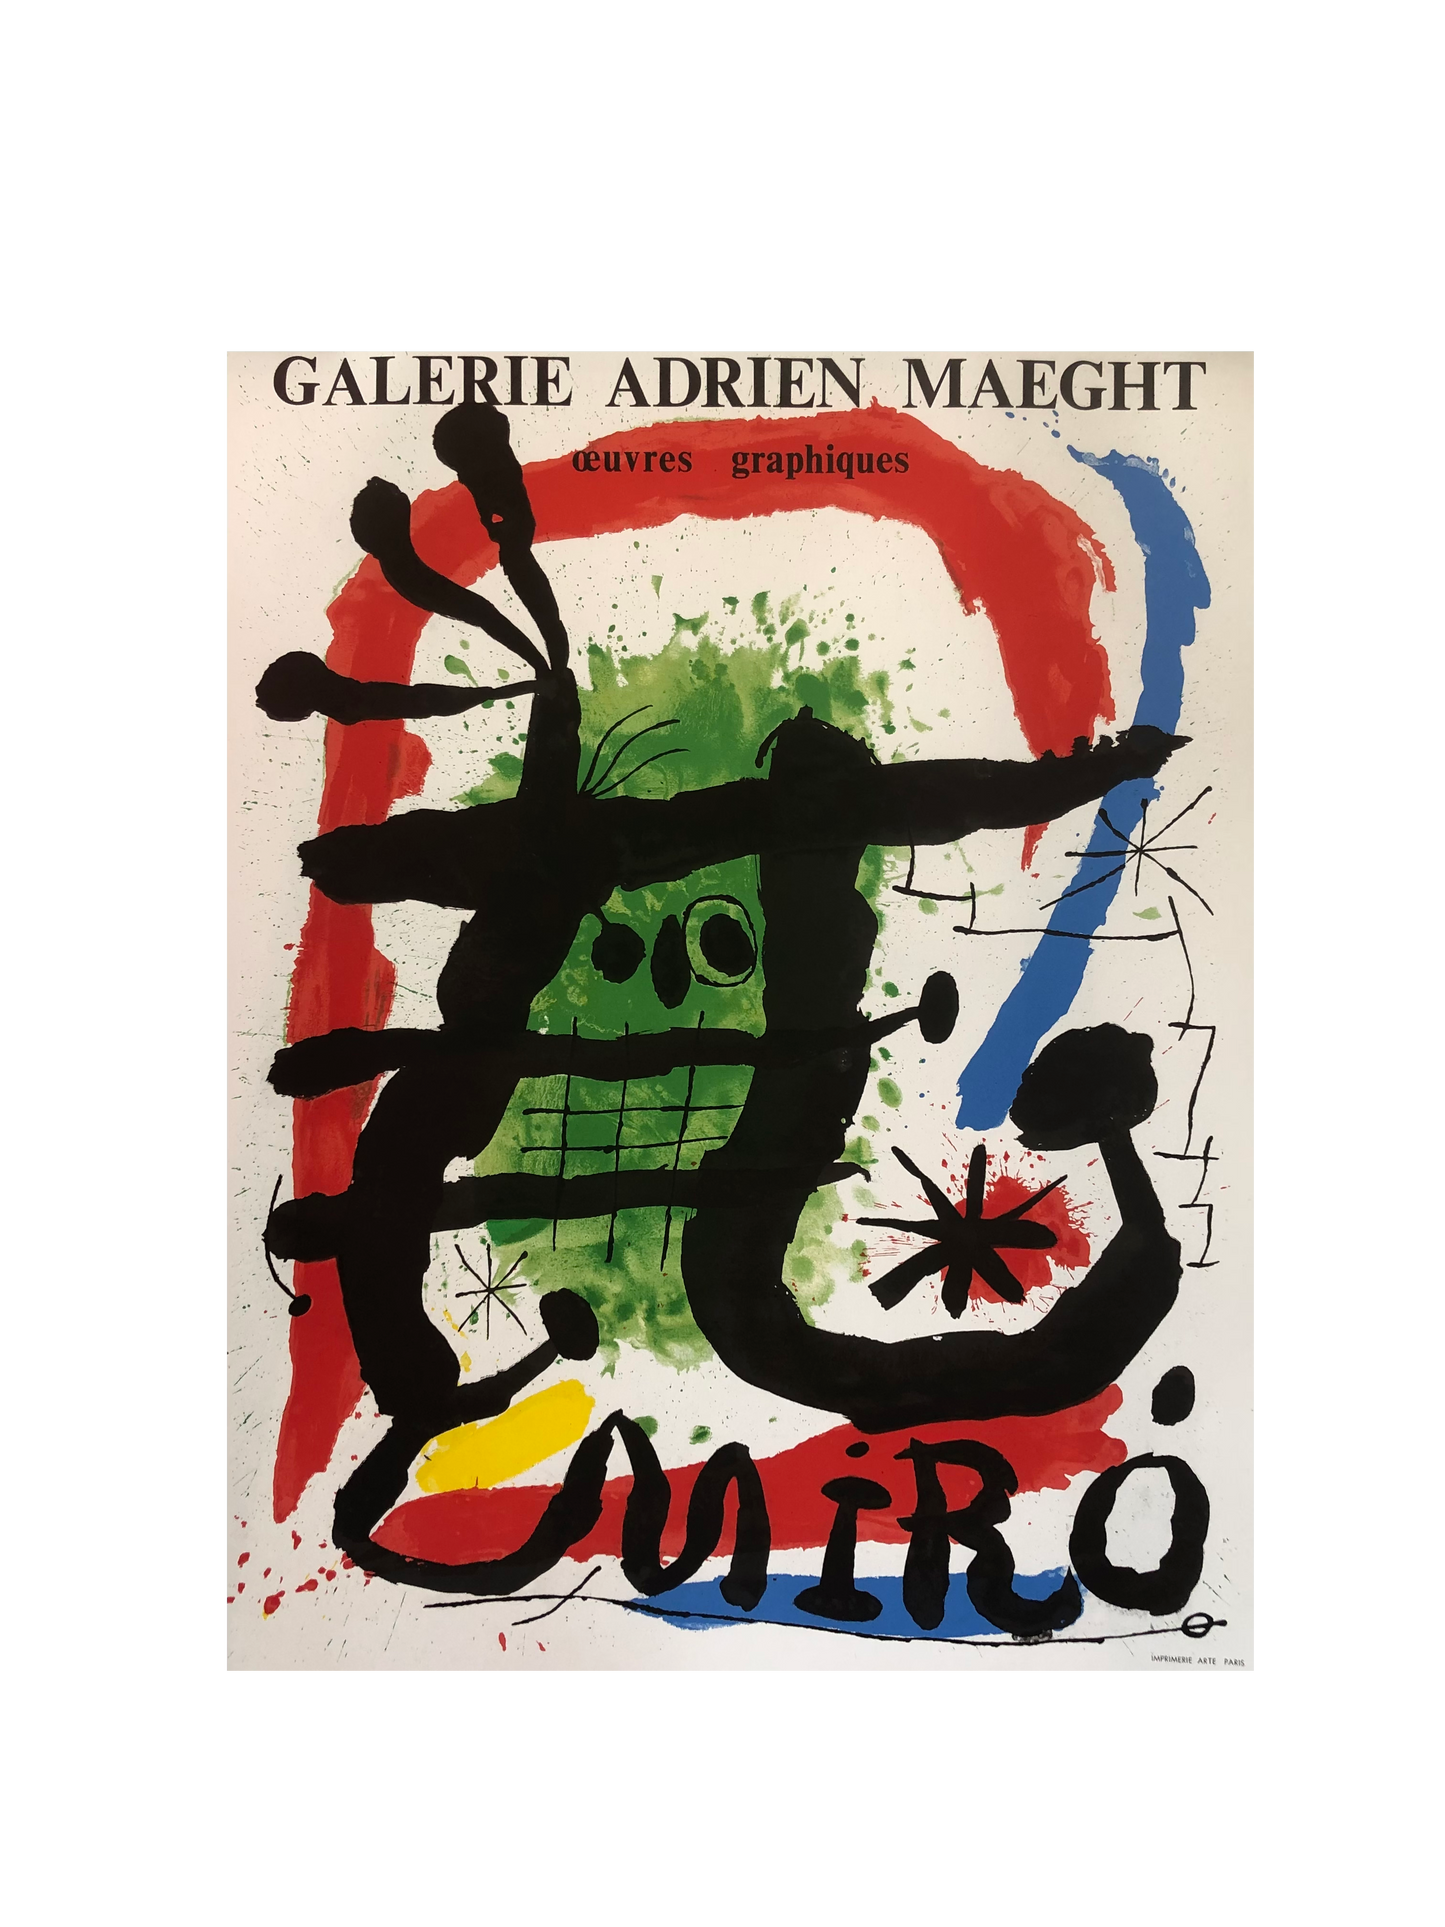 Galerie Adrien Maeght Miro Exhibition Poster